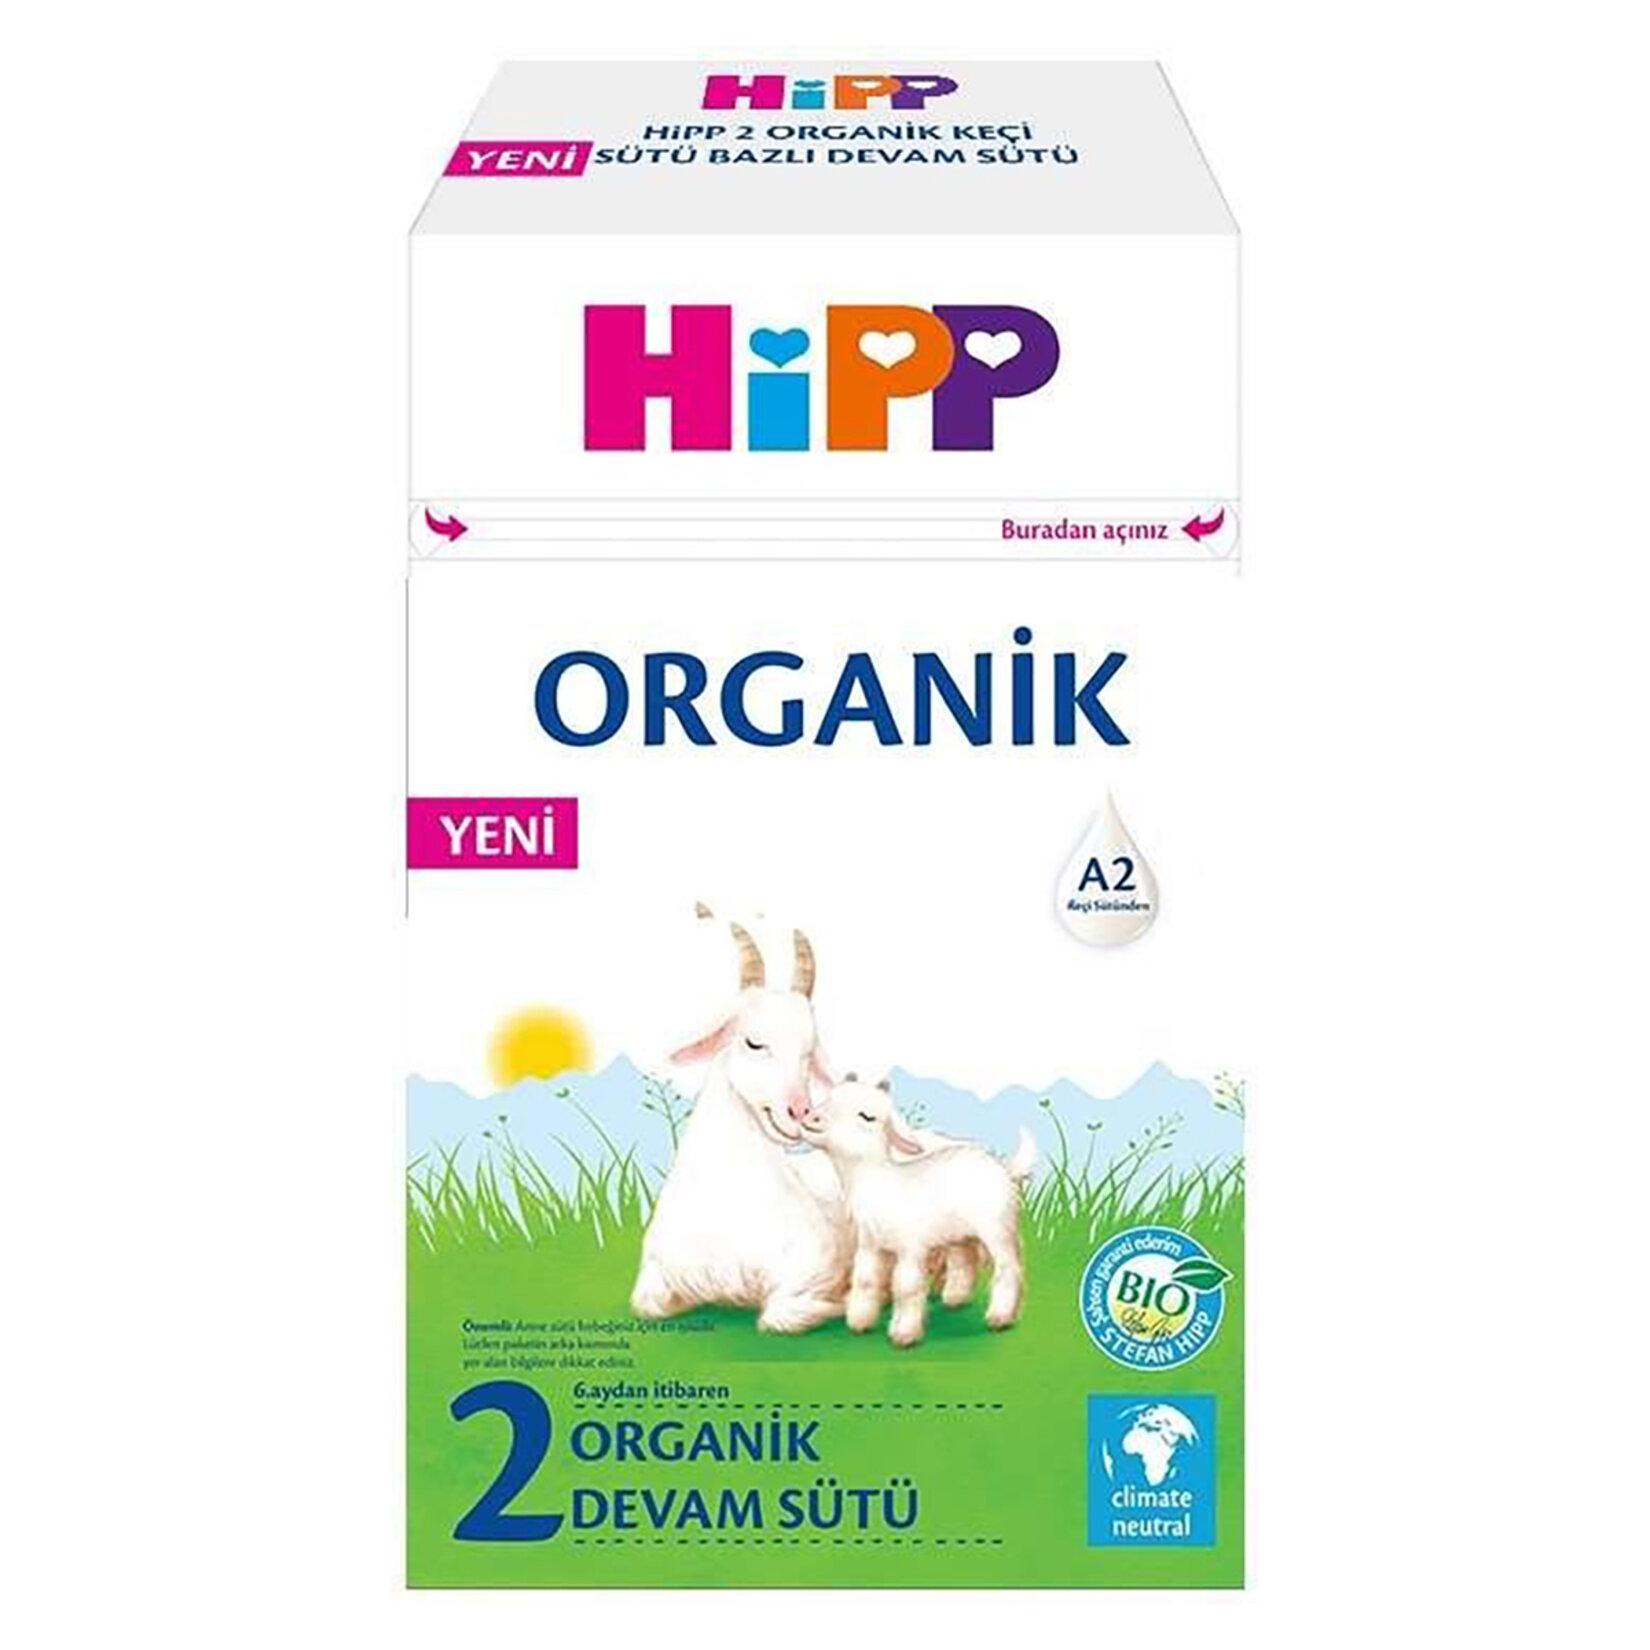 Hipp 2 Organik Keçi Sütü Bazlı Devam Sütü 400 gr 2'li Paket